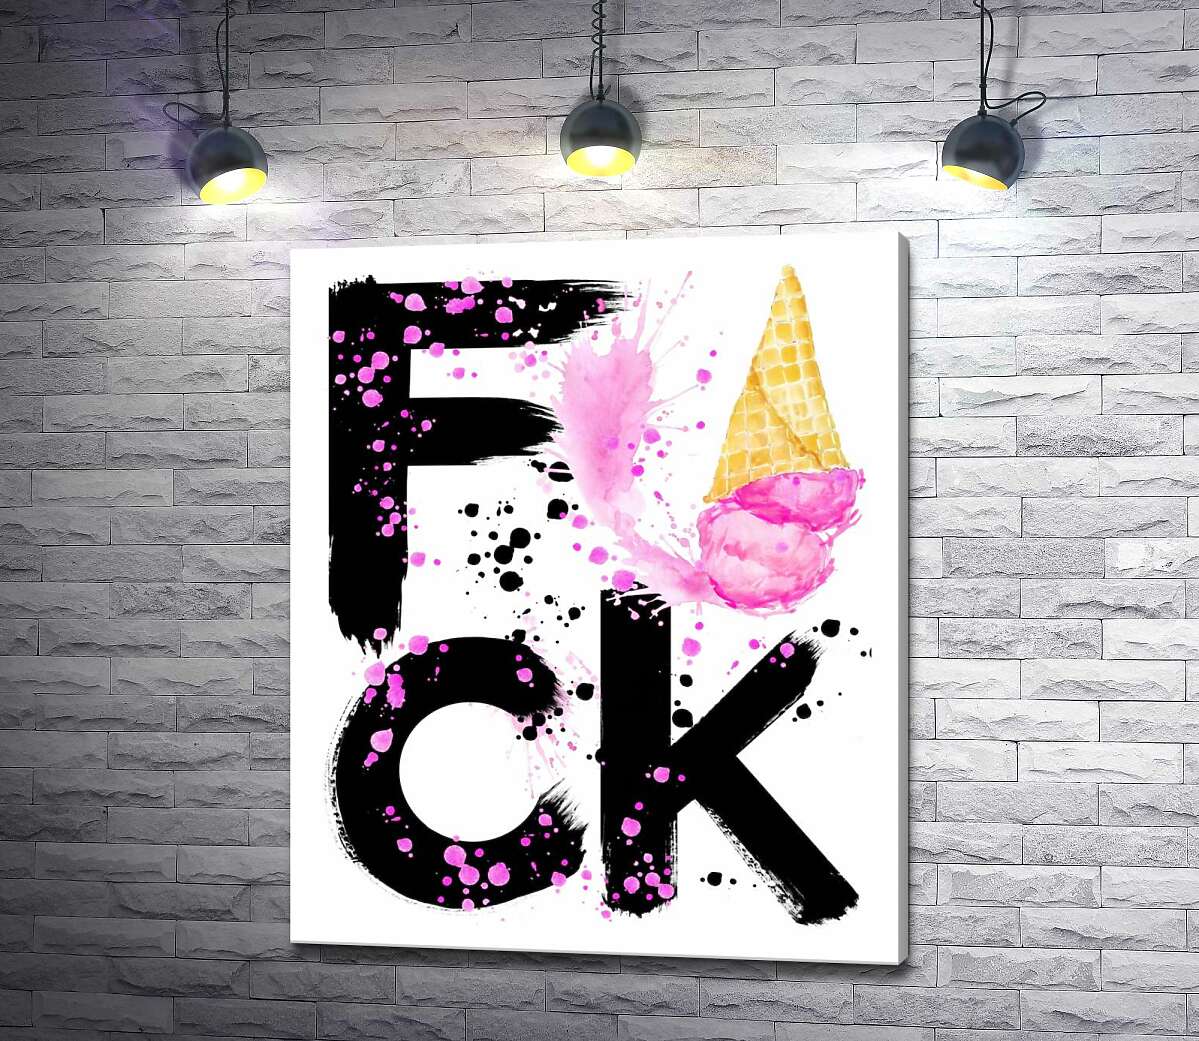 картина Черное слово "fuck" с рожком мороженого